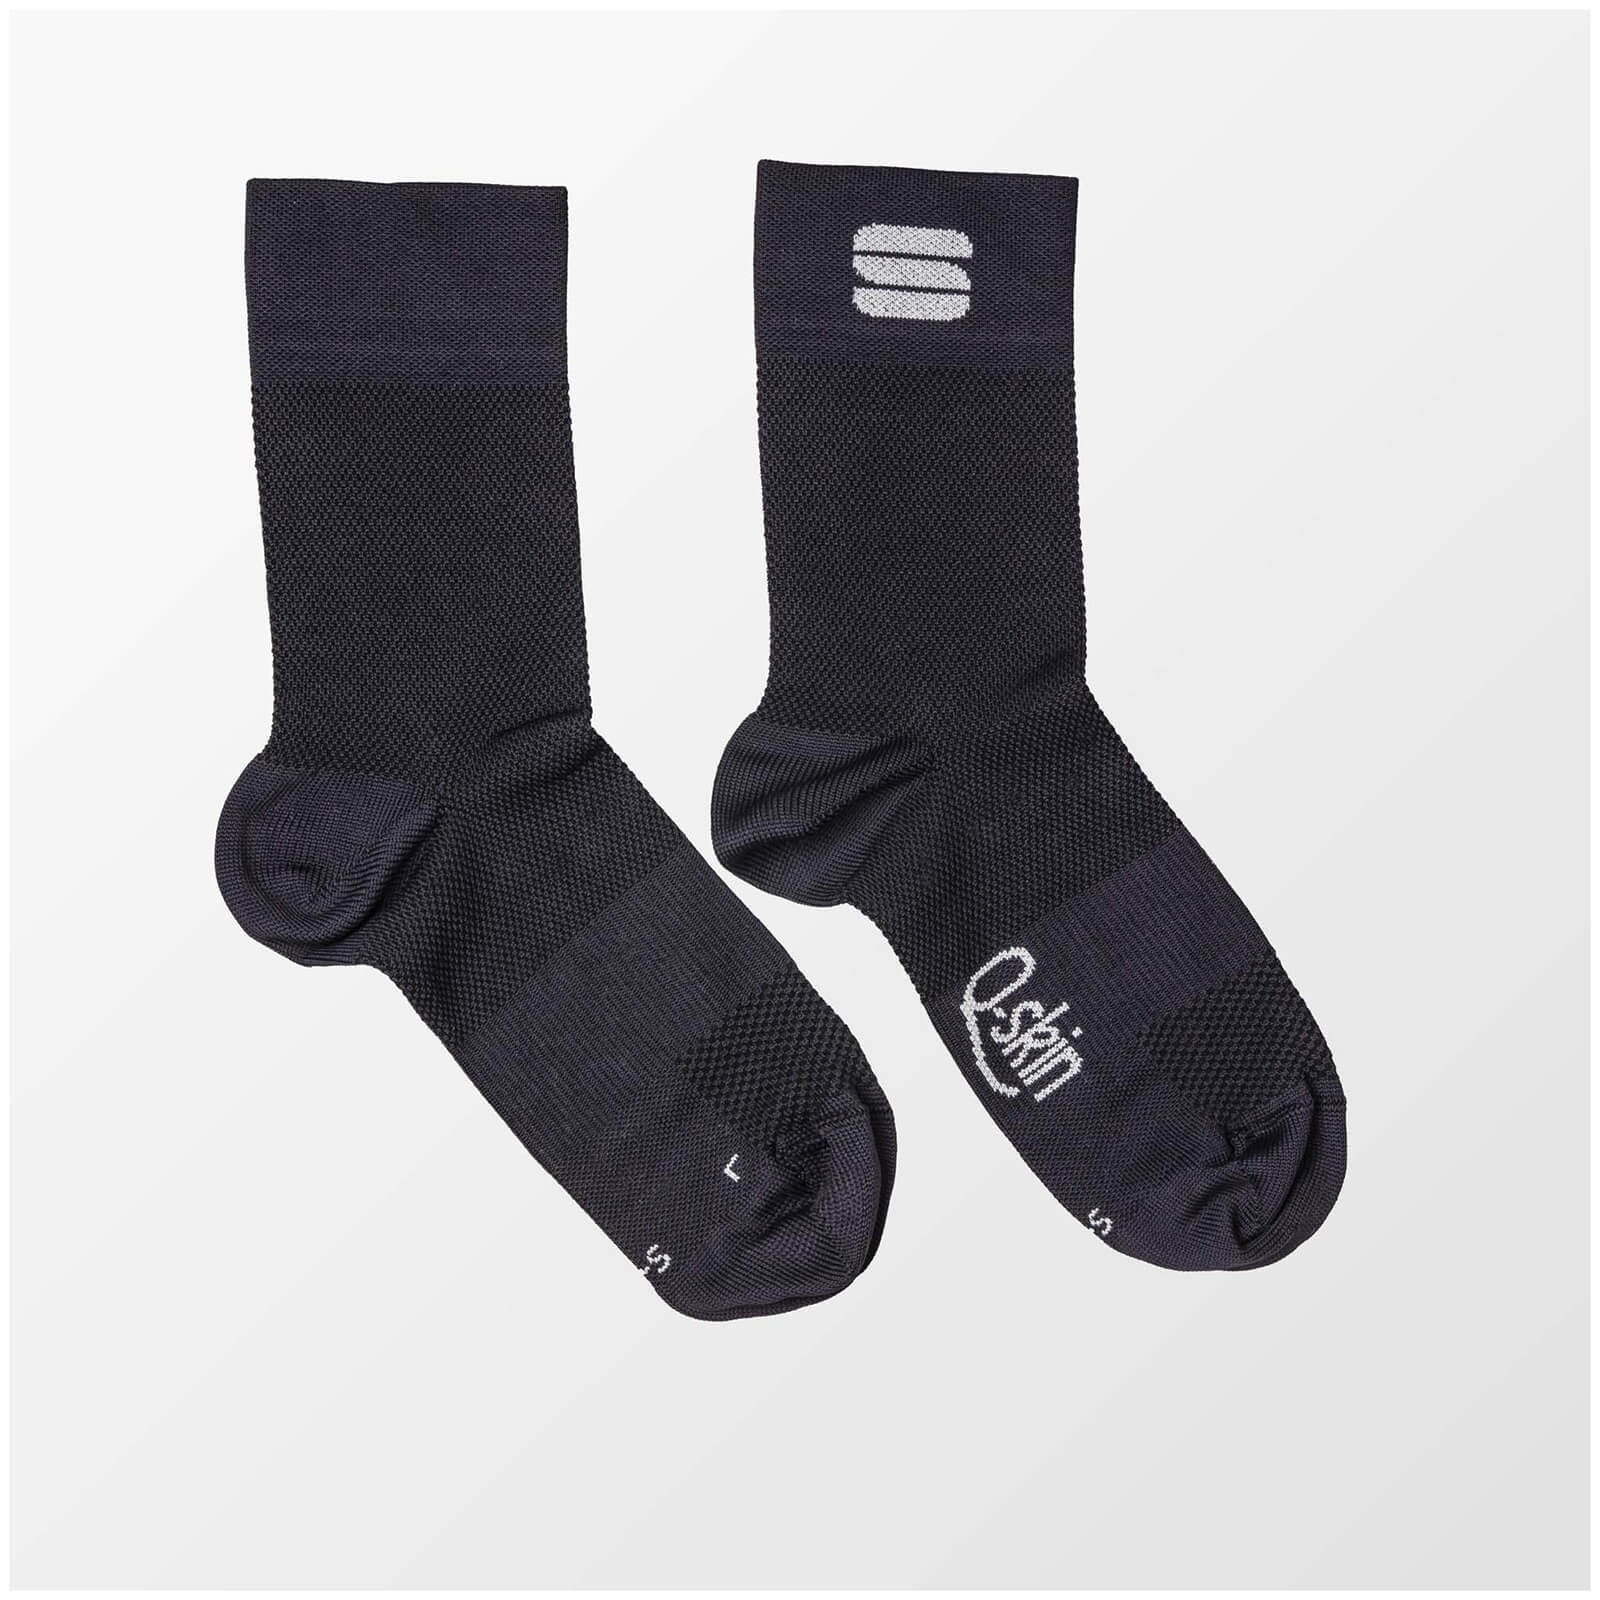 Sportful Matchy Socks - S - Black